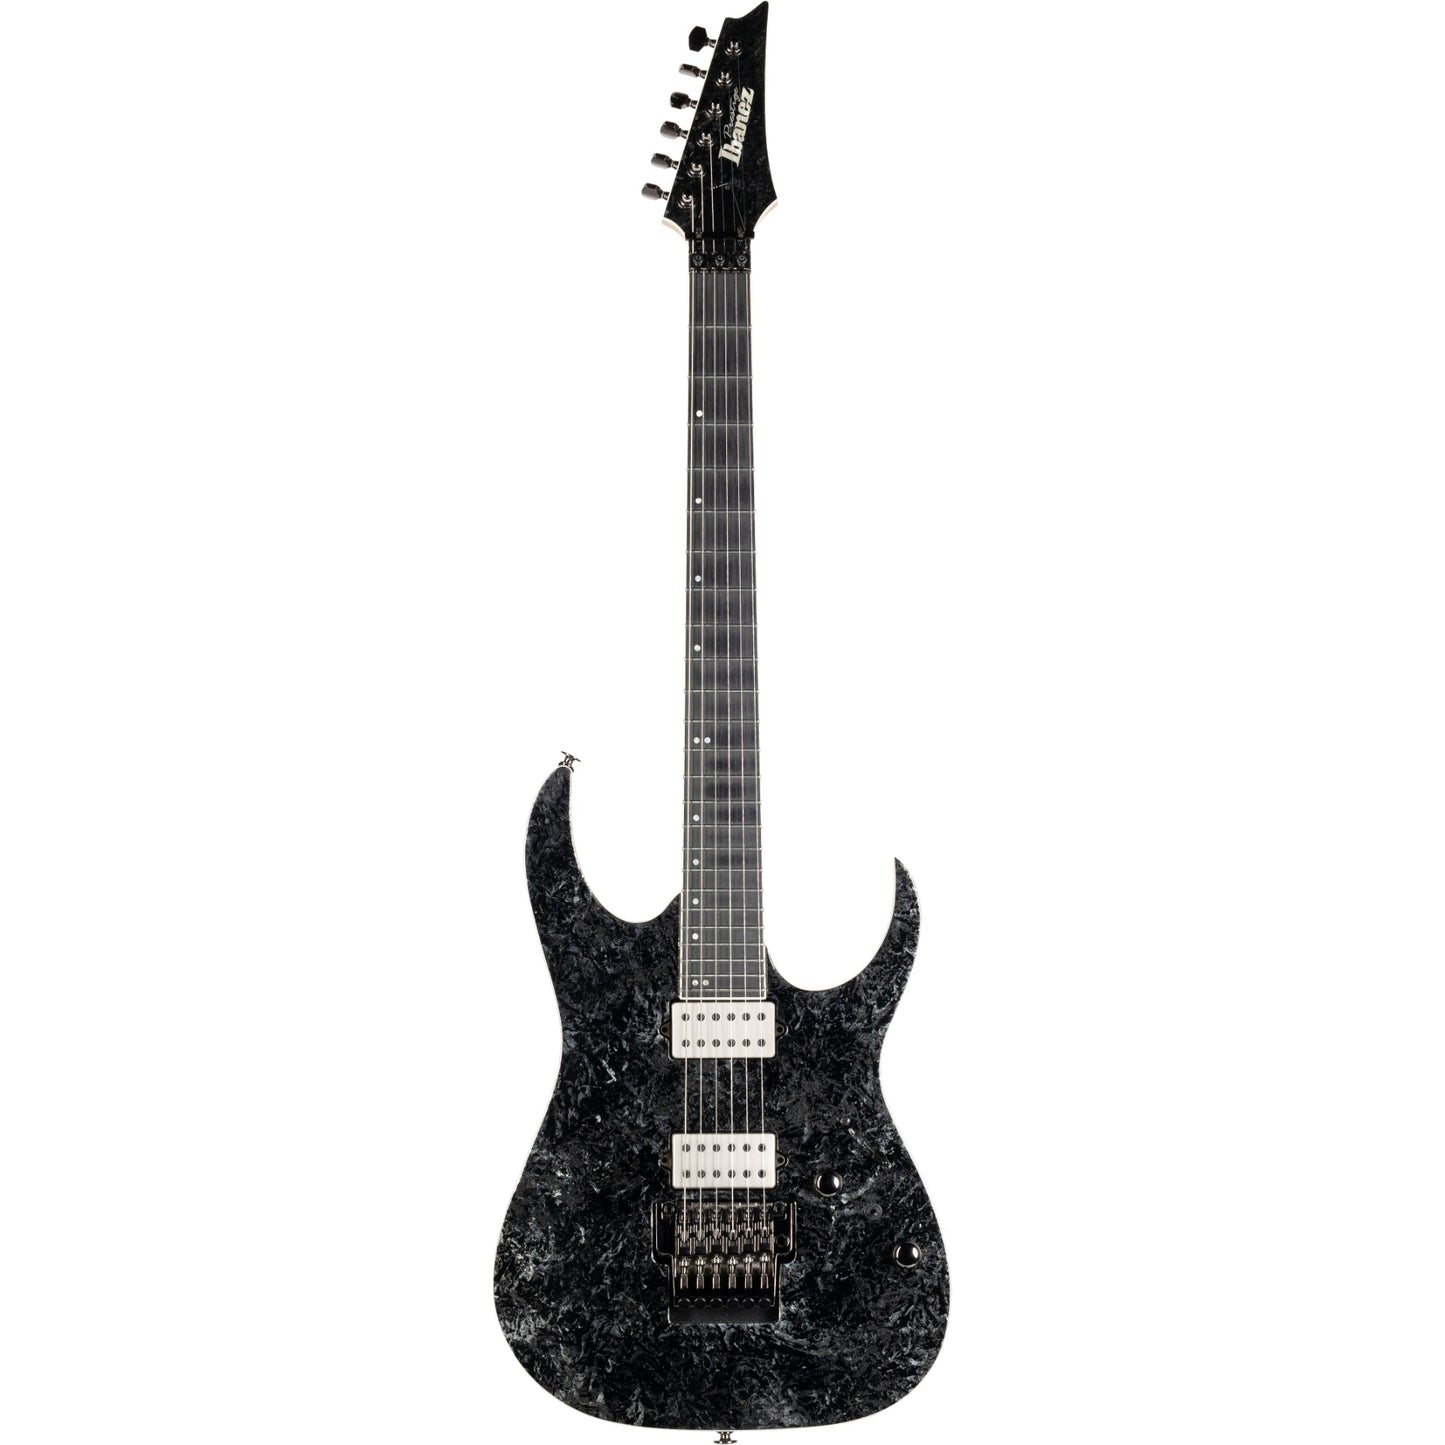 Ibanez RG5320 RG Prestige Electric Guitar w/ Case - Cosmic Shadow